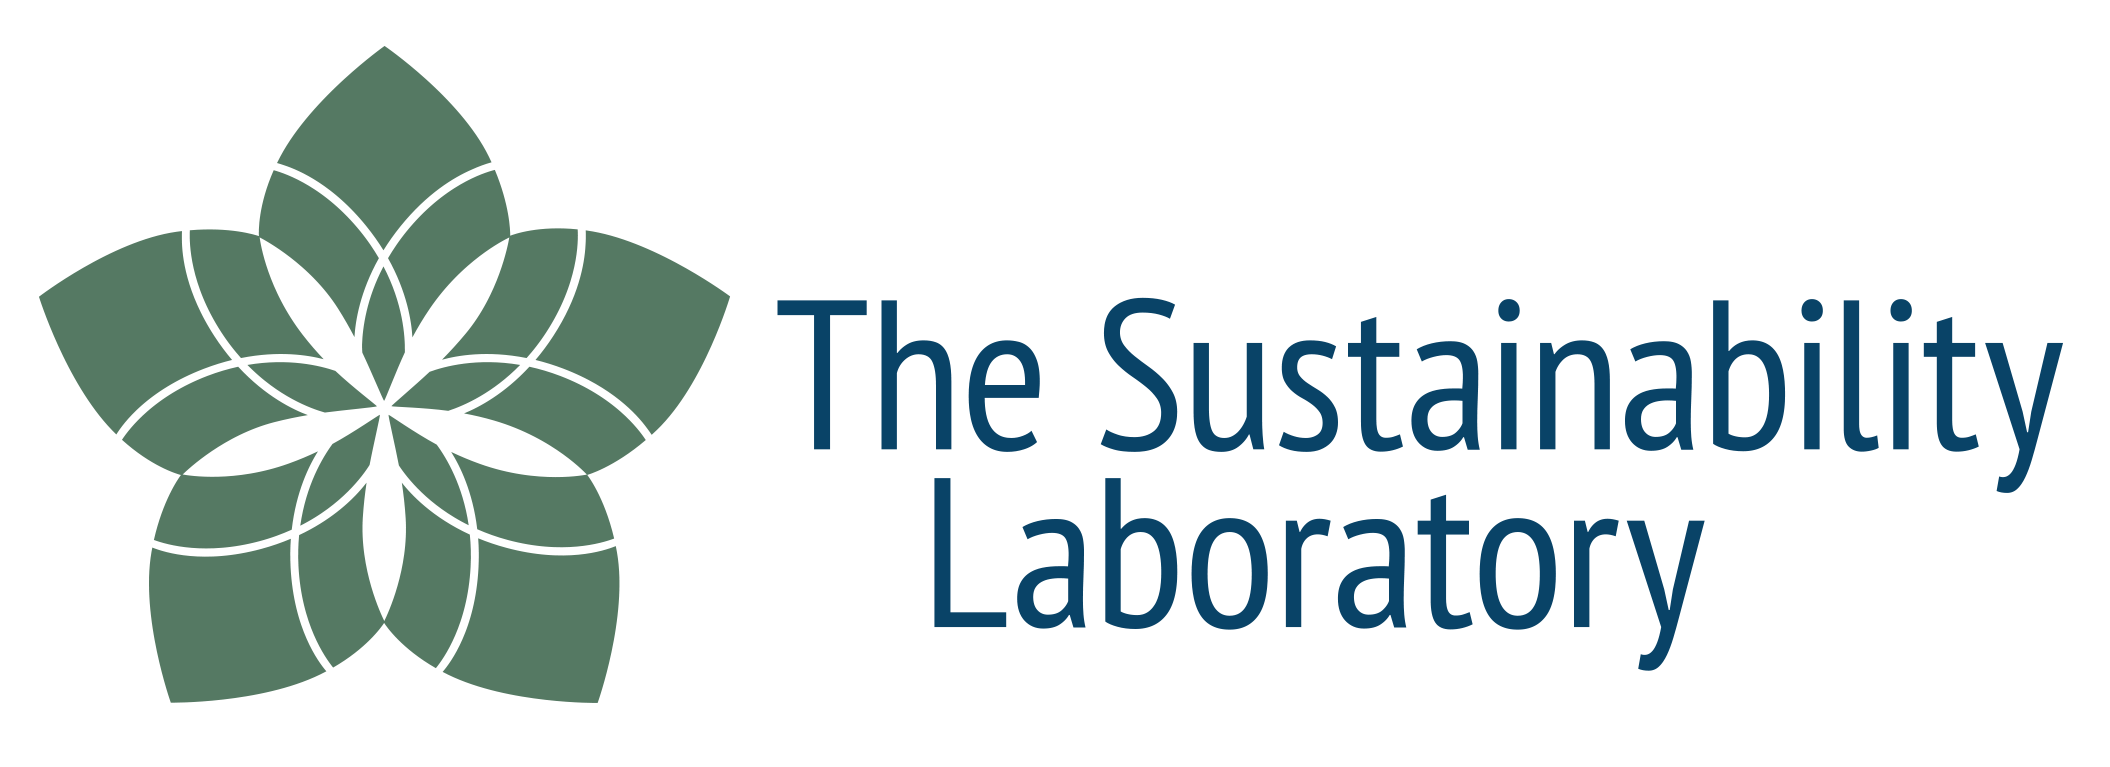 logo for The Sustainability Laboratory